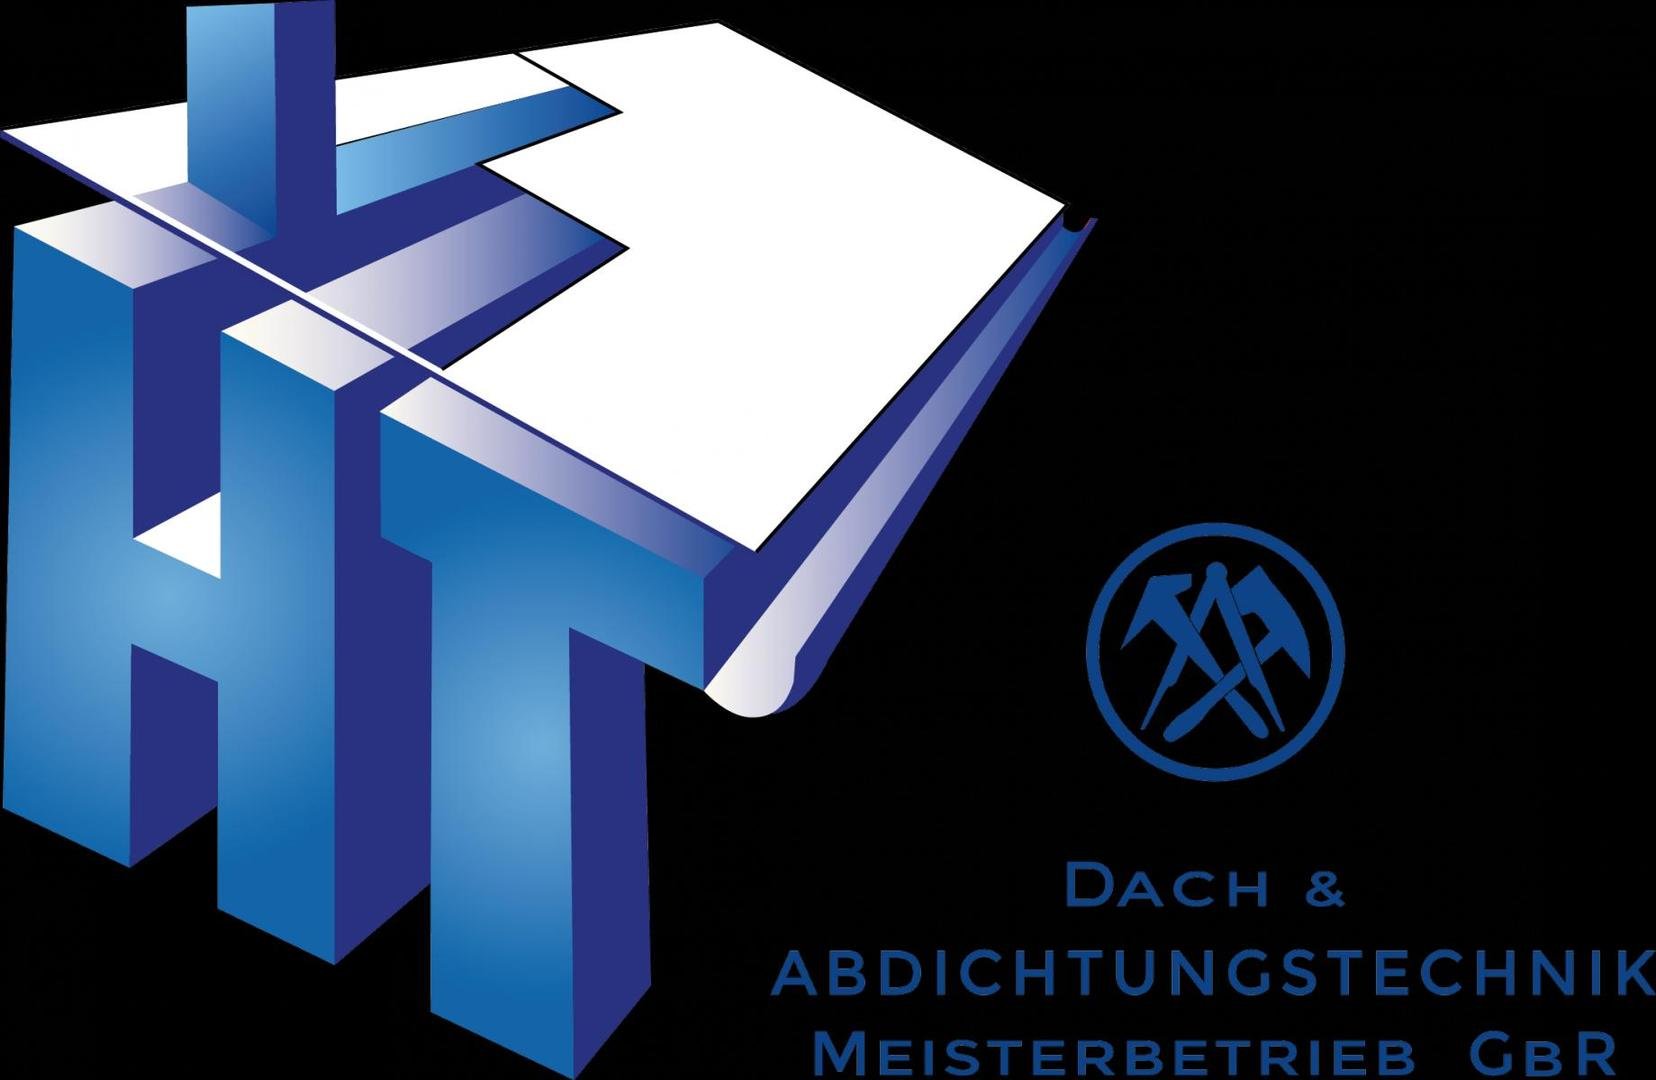 HT - Dach & Abdichtungstechnik Meisterbetrieb GbR Logo